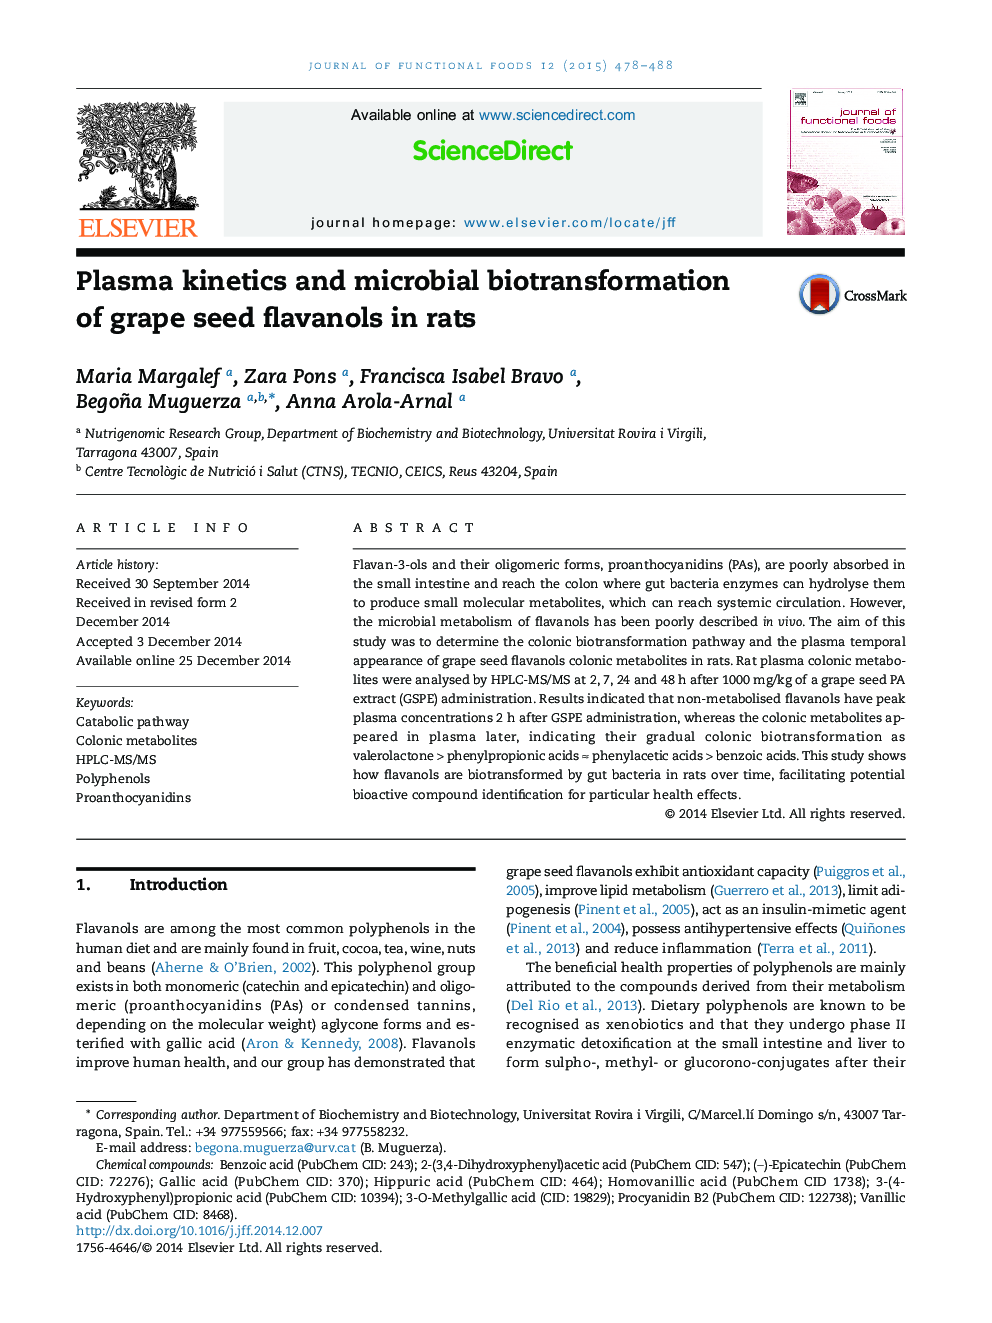 Plasma kinetics and microbial biotransformation of grape seed flavanols in rats